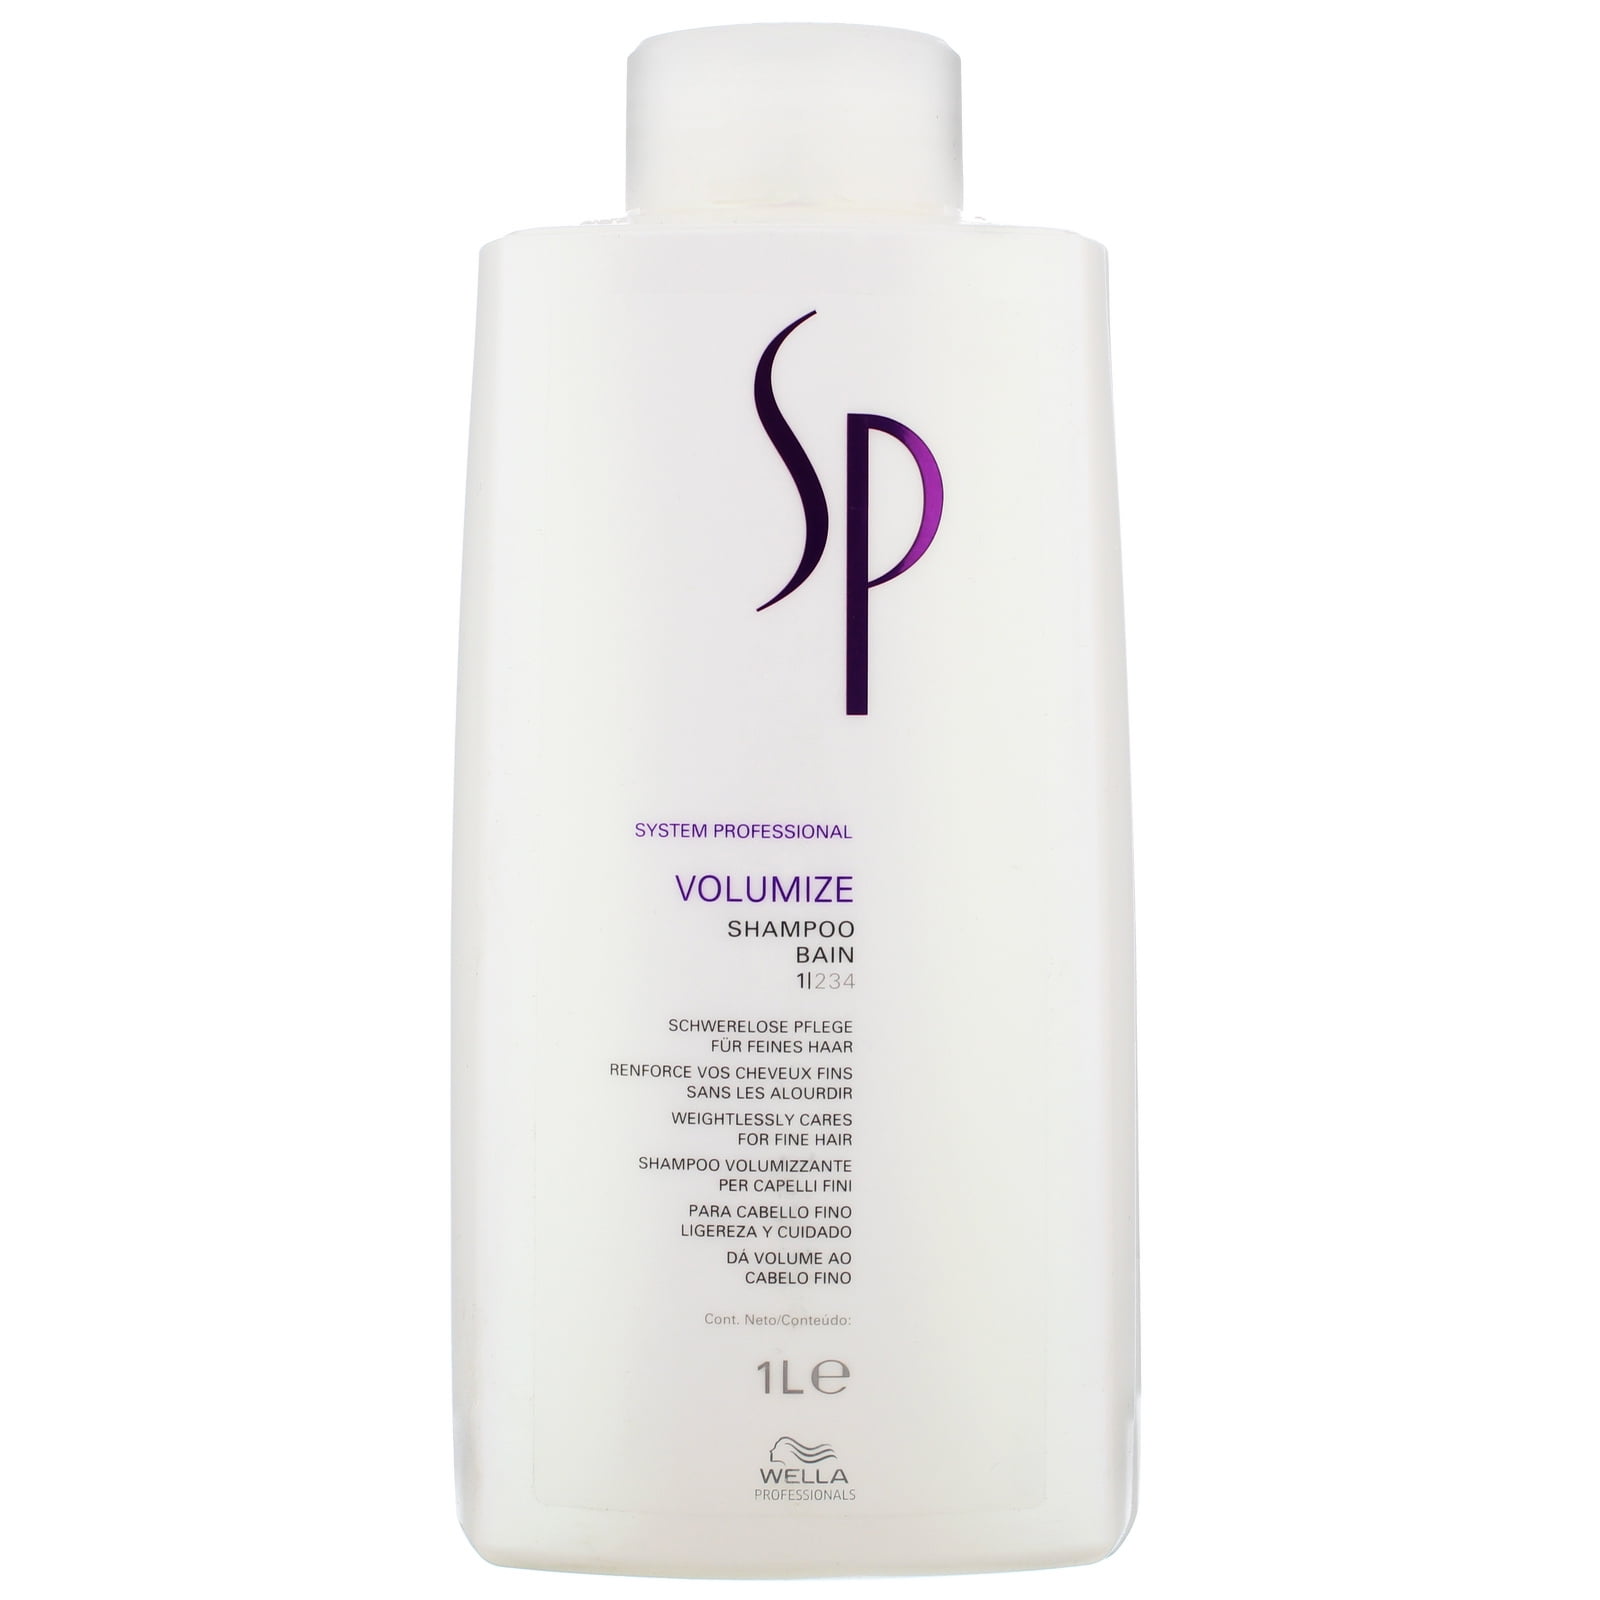 33.8 oz , Wella System Volumize Shampoo Bain , Hair Beauty Product - Pack of 3 w/ Sleek Pin Comb -